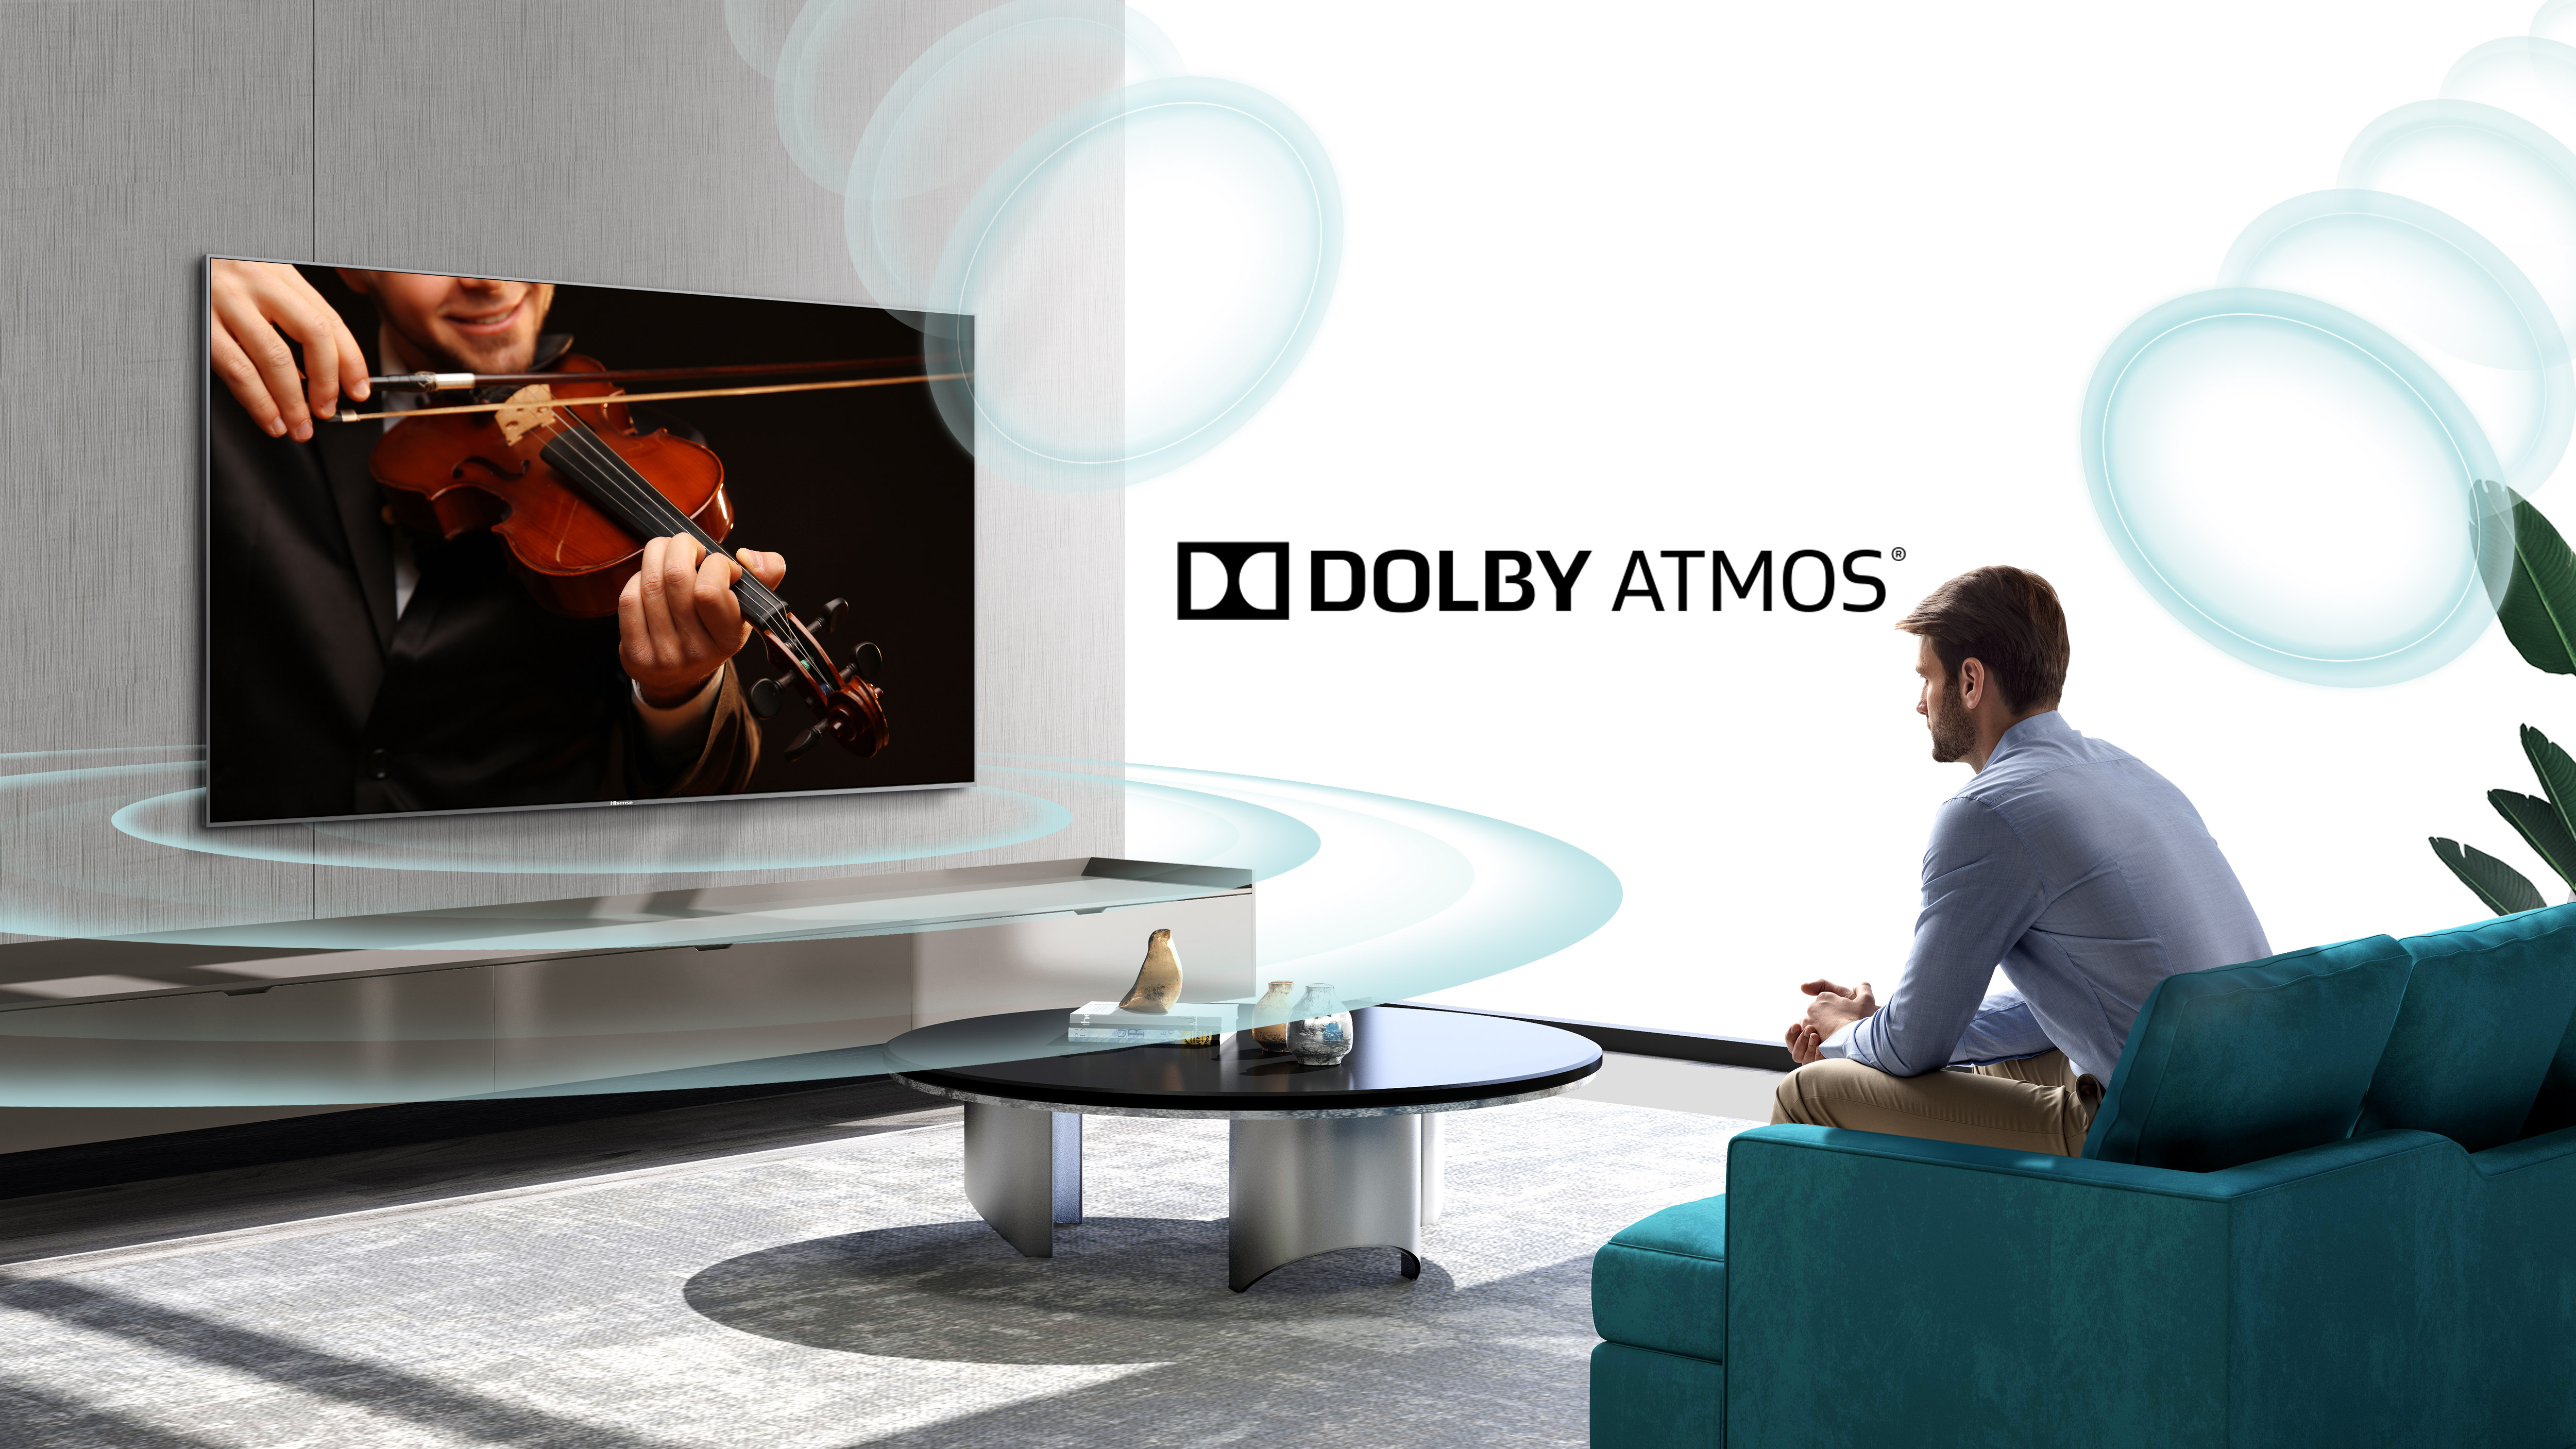 ULED TV Dolby Atmos Hisense